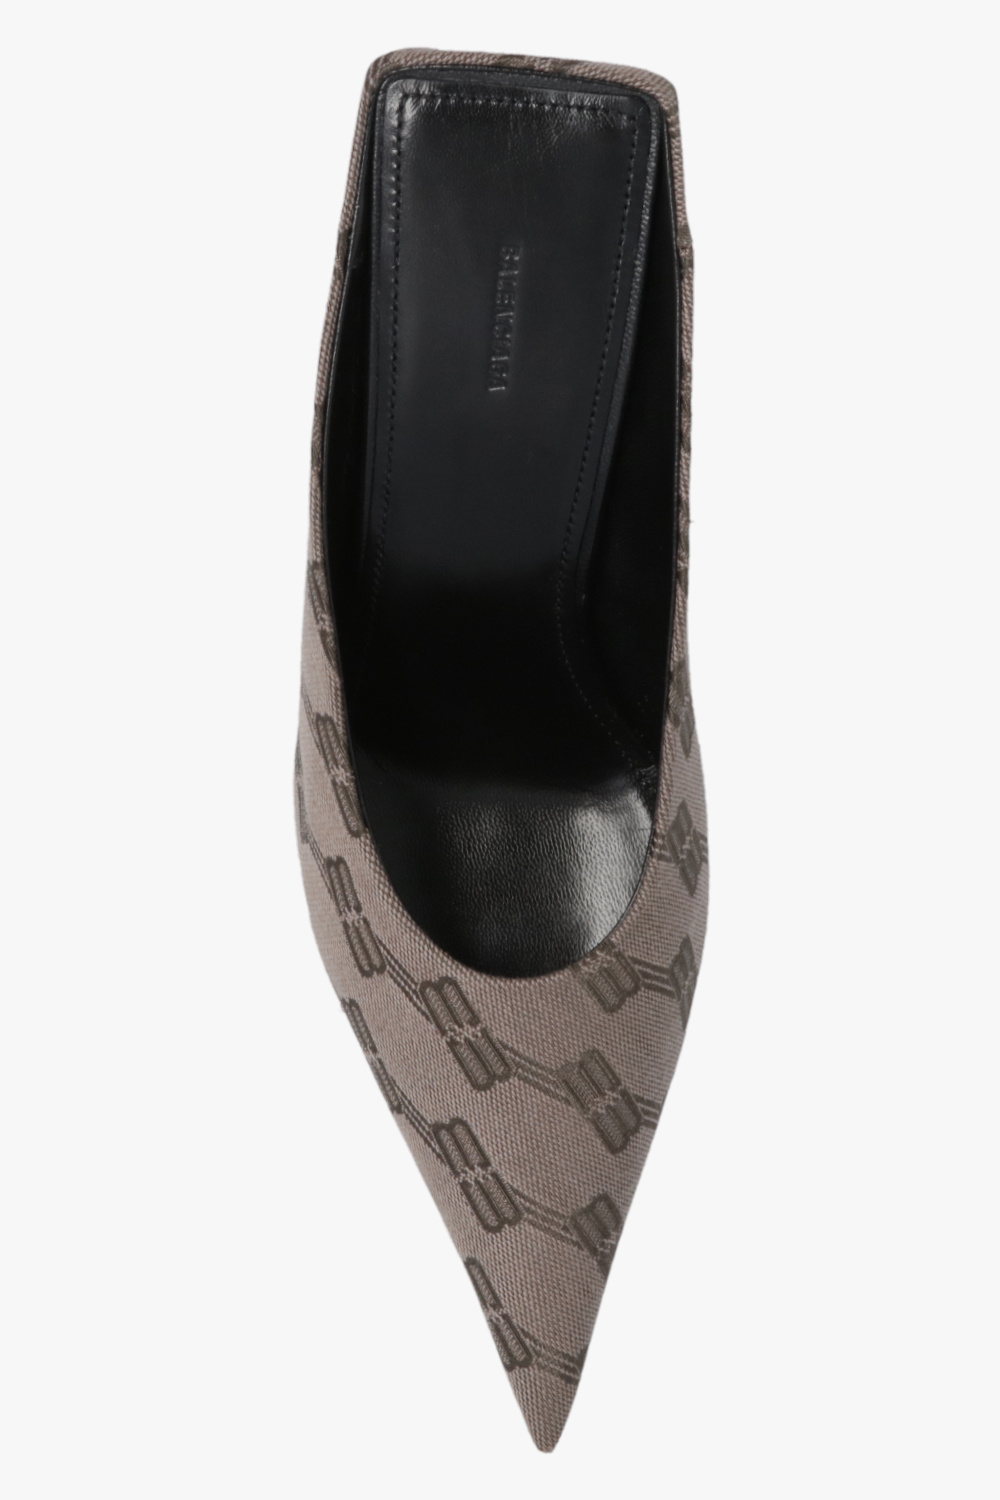 Balenciaga Teva Voya Strappy Leather Woman Sandals